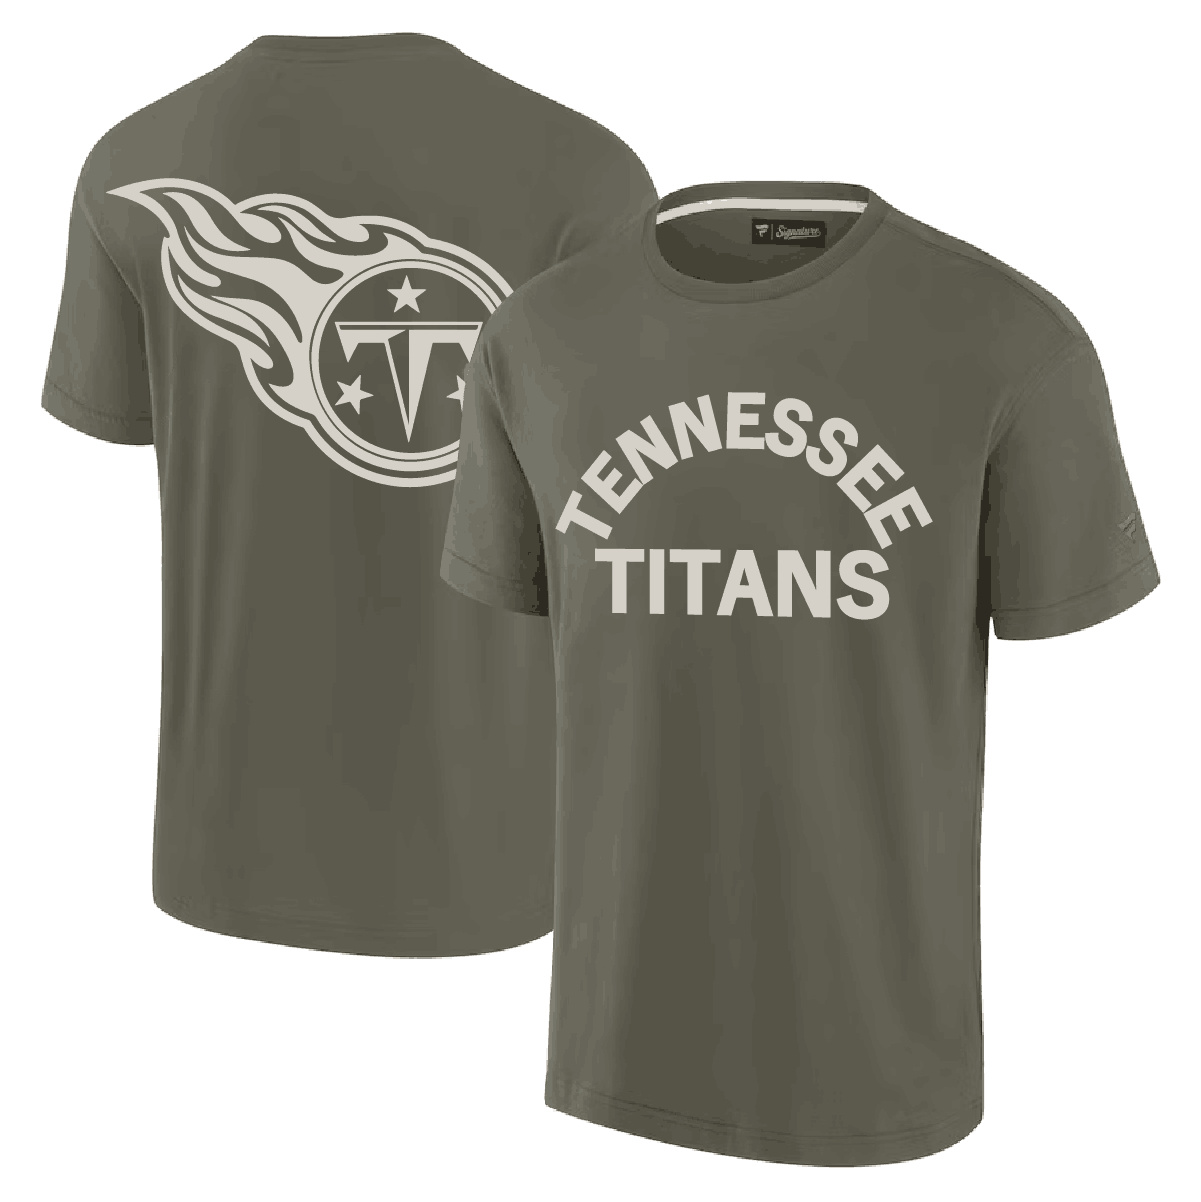 Men's Tennessee Titans Olive Elements Super Soft T-Shirt